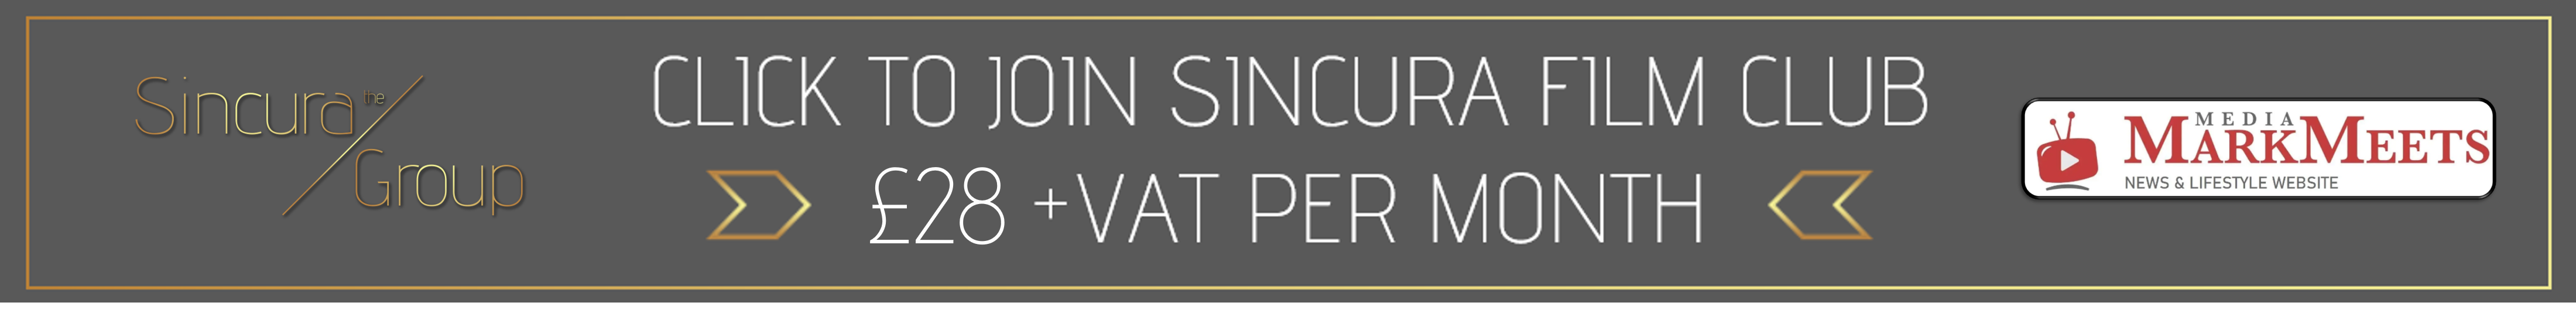 join sincura news service